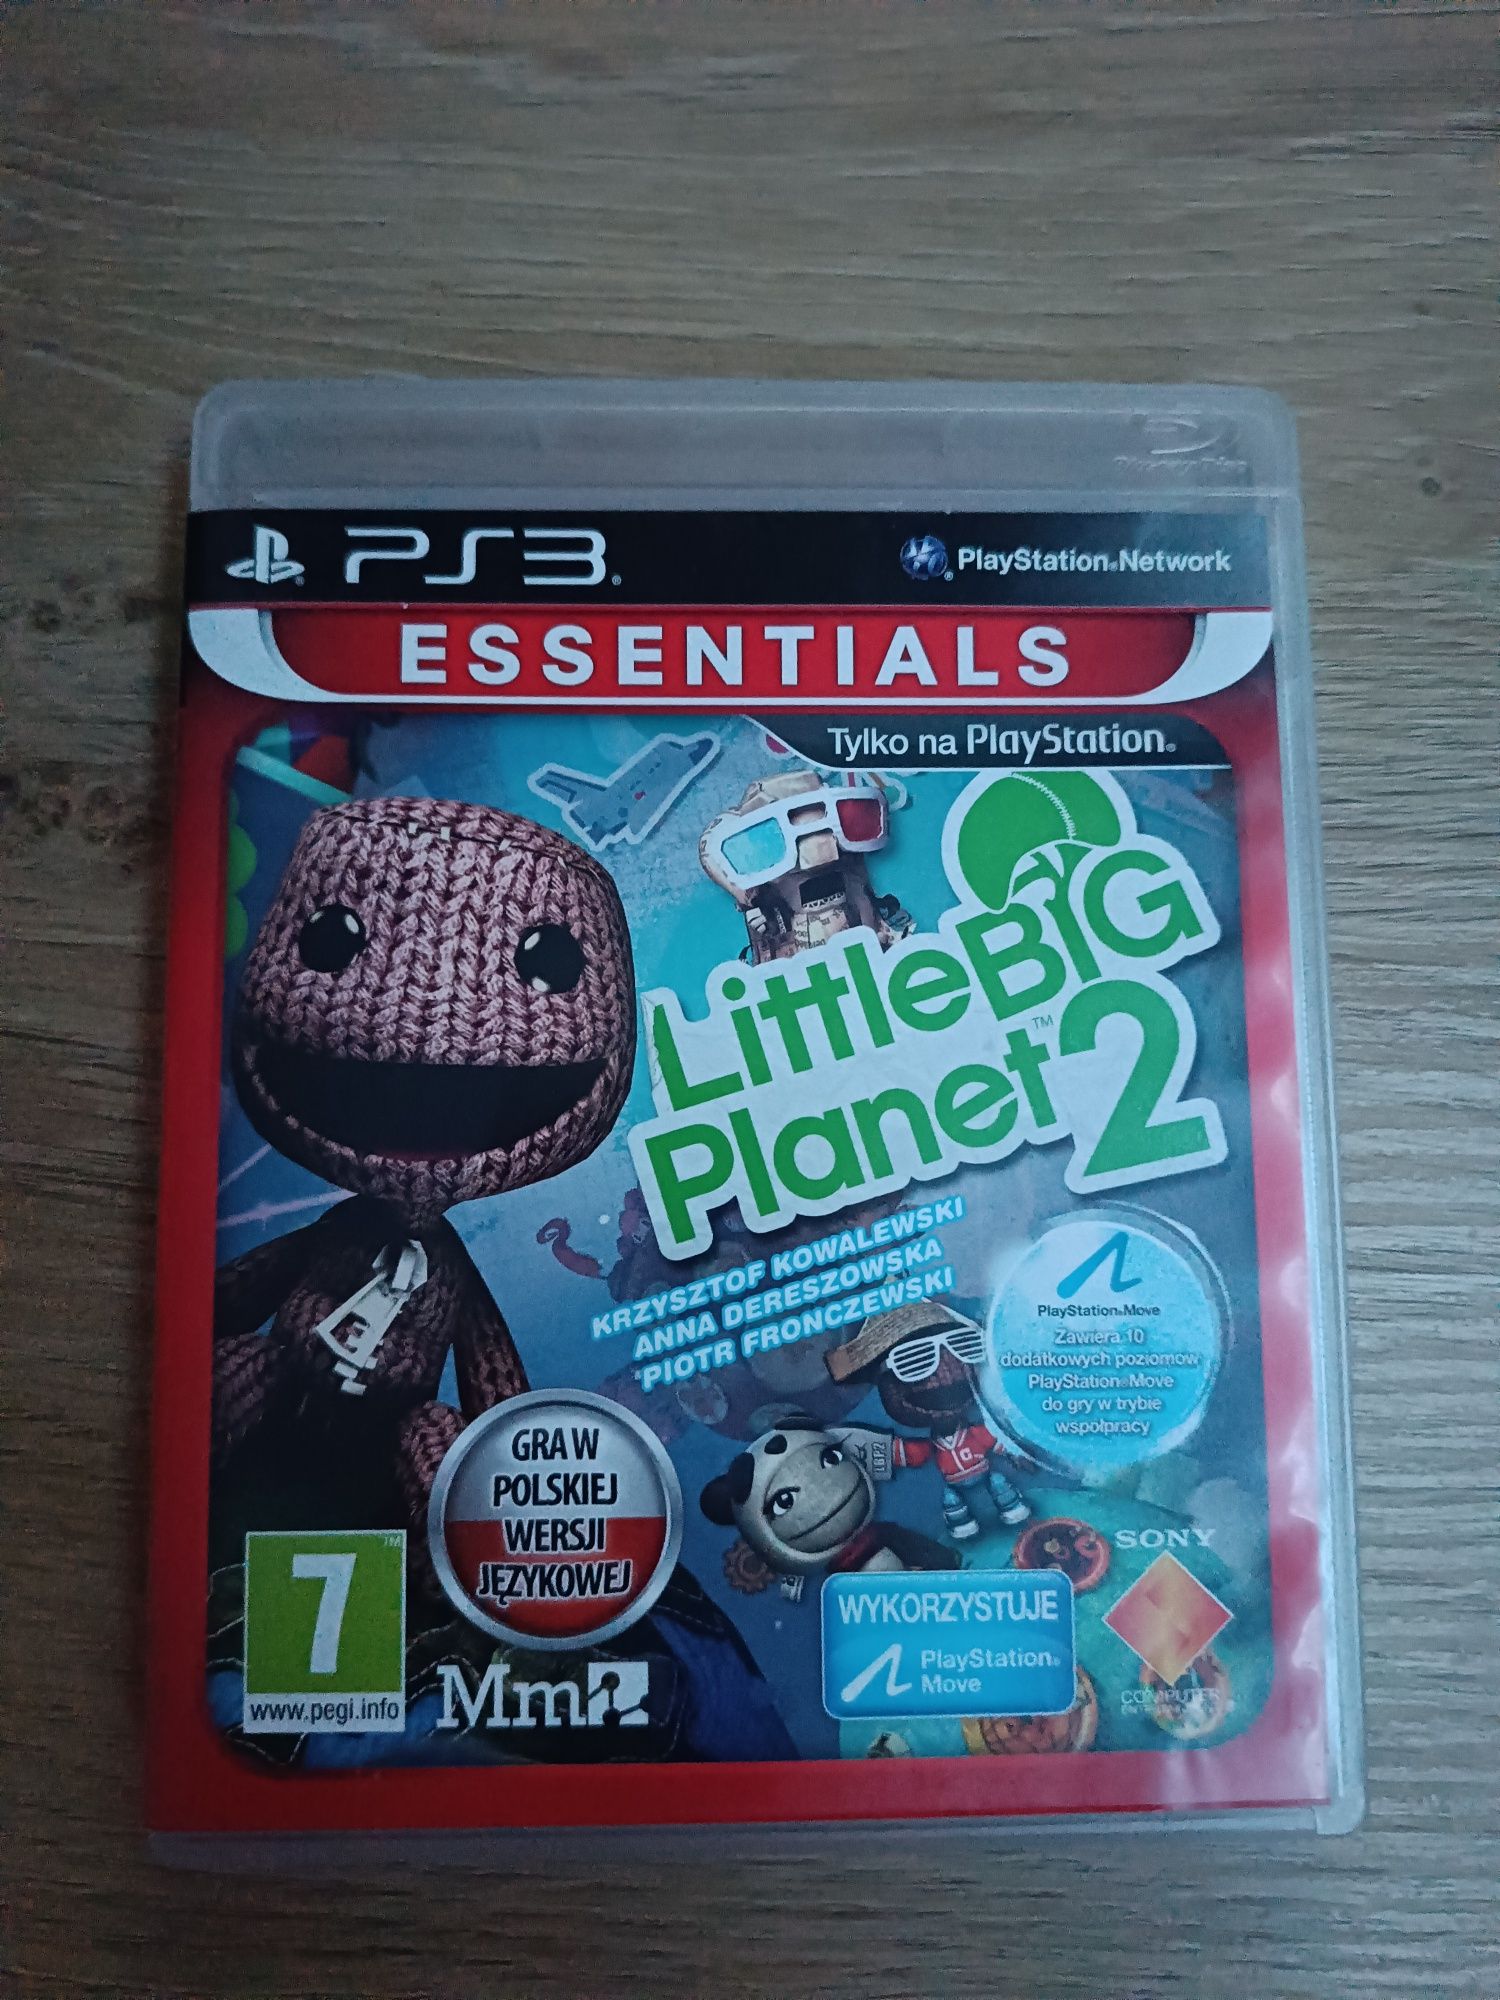 Little Big planet 2 PS3